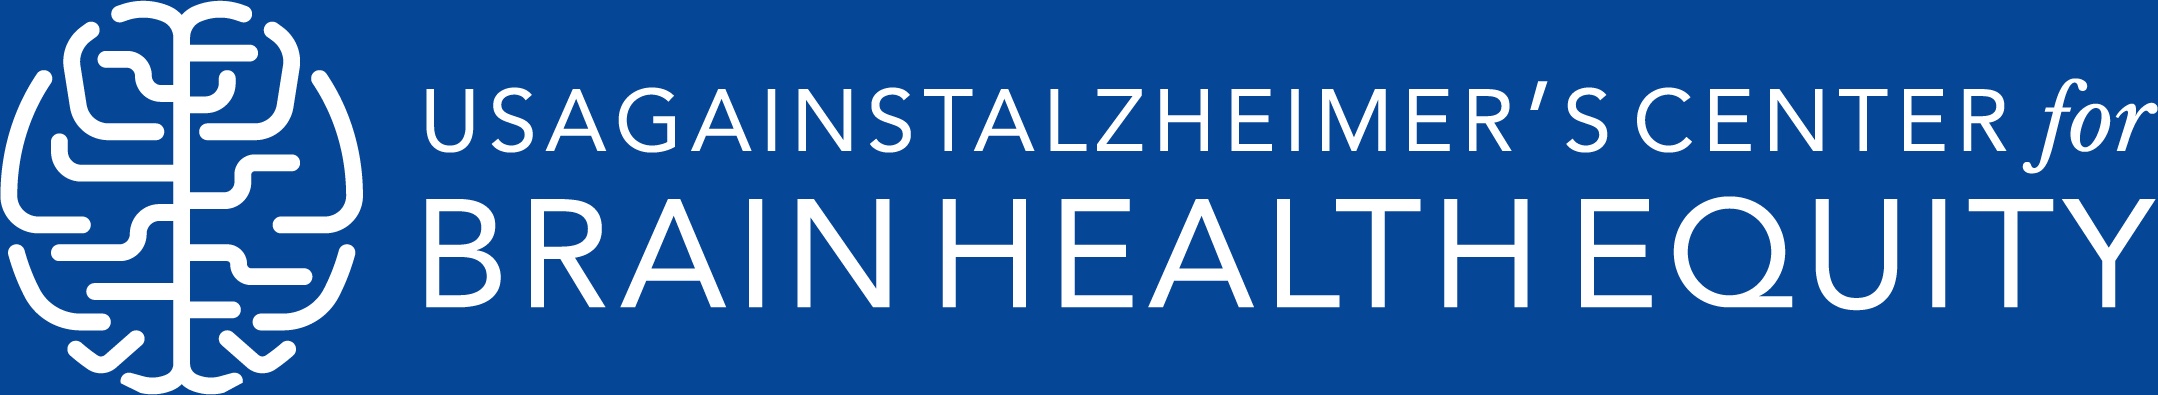 brain health equity logo